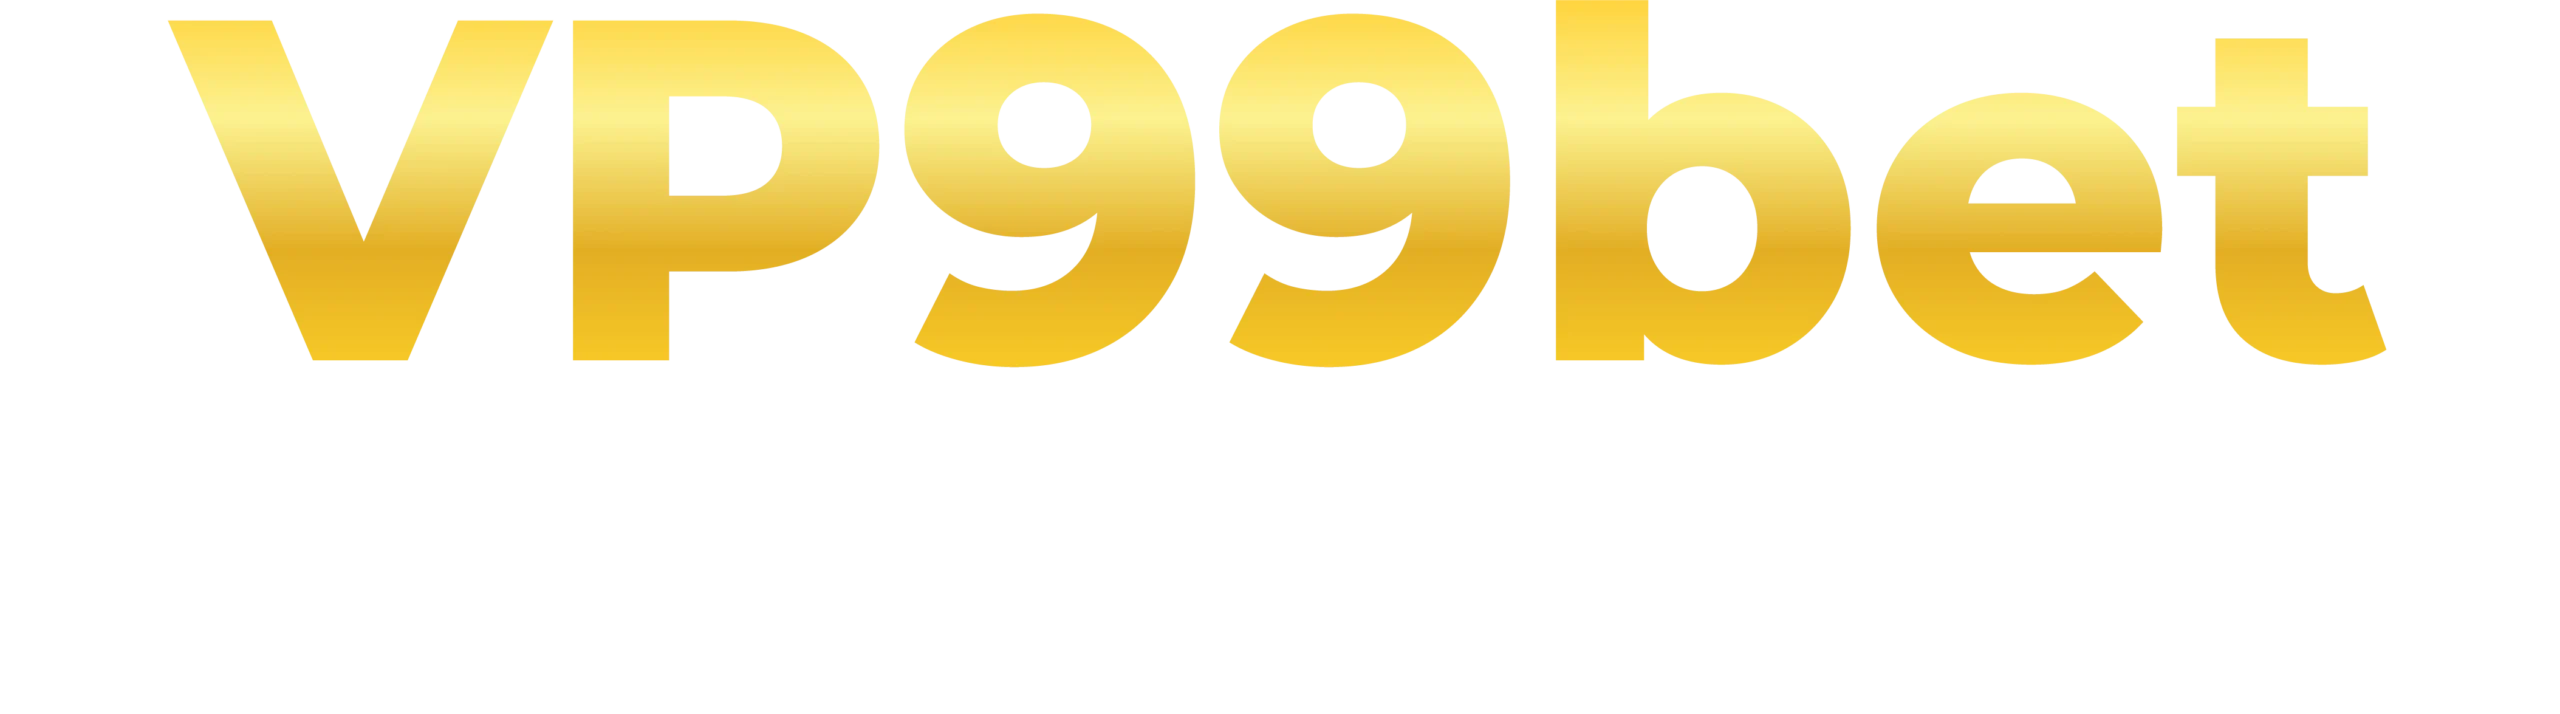 vip99bet logo